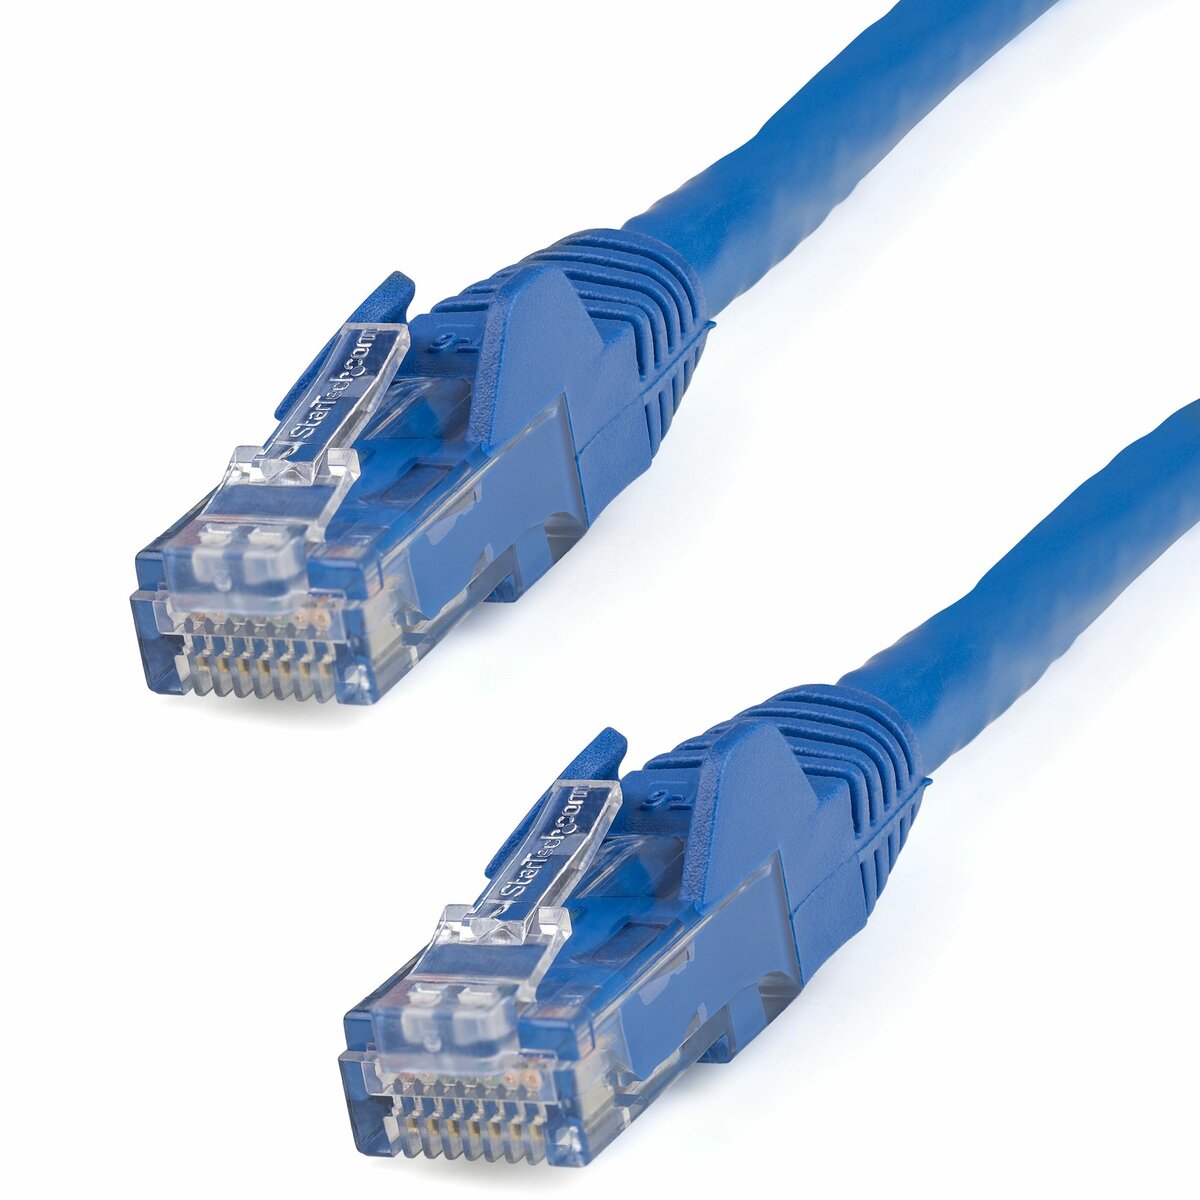 COPPER 7 foot Cable Cat 6 Patch Cord Ethernet LAN You Choose Color **NOT CC A** 